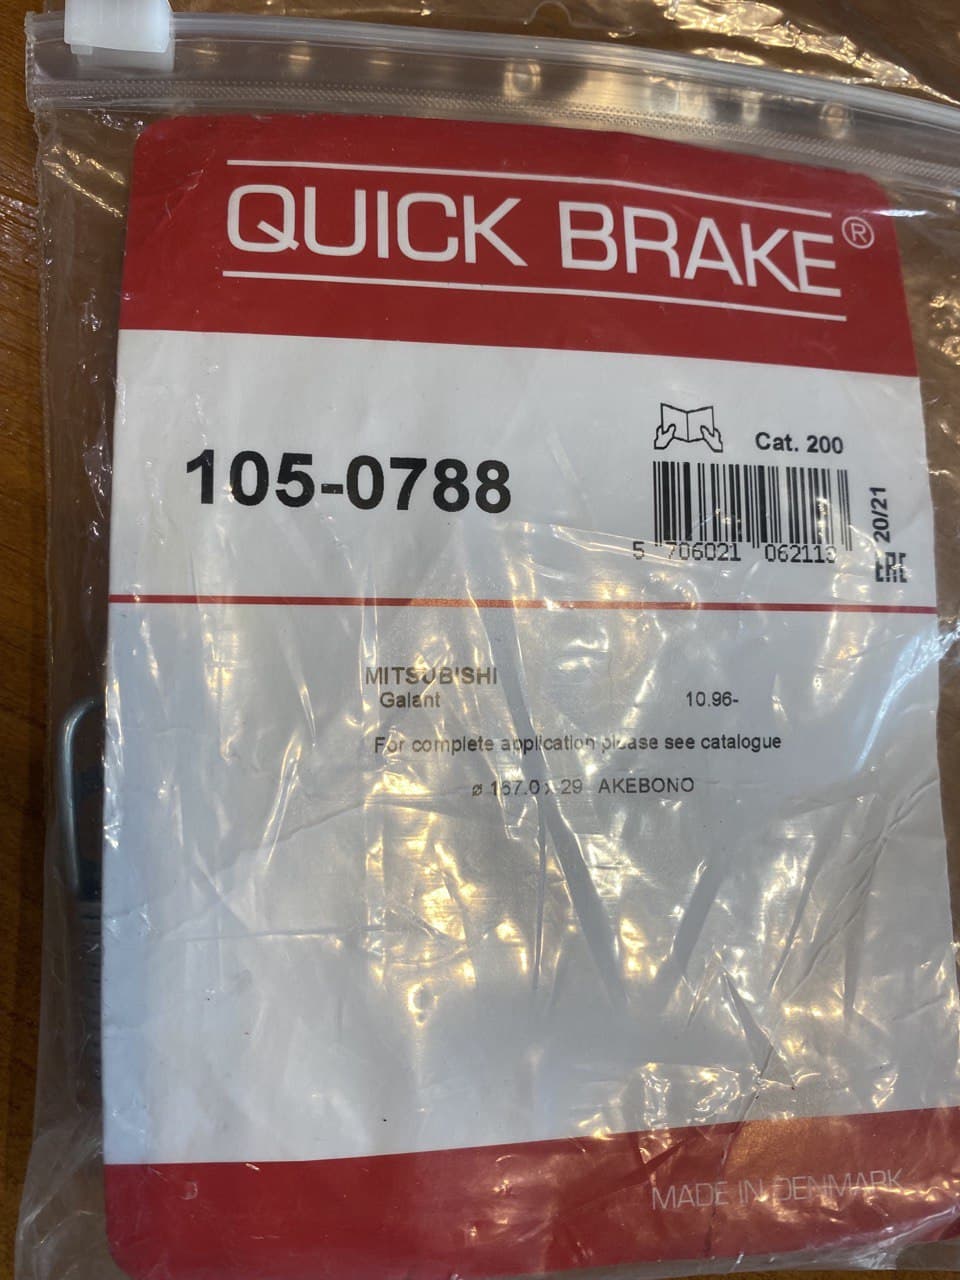     Quick Brake